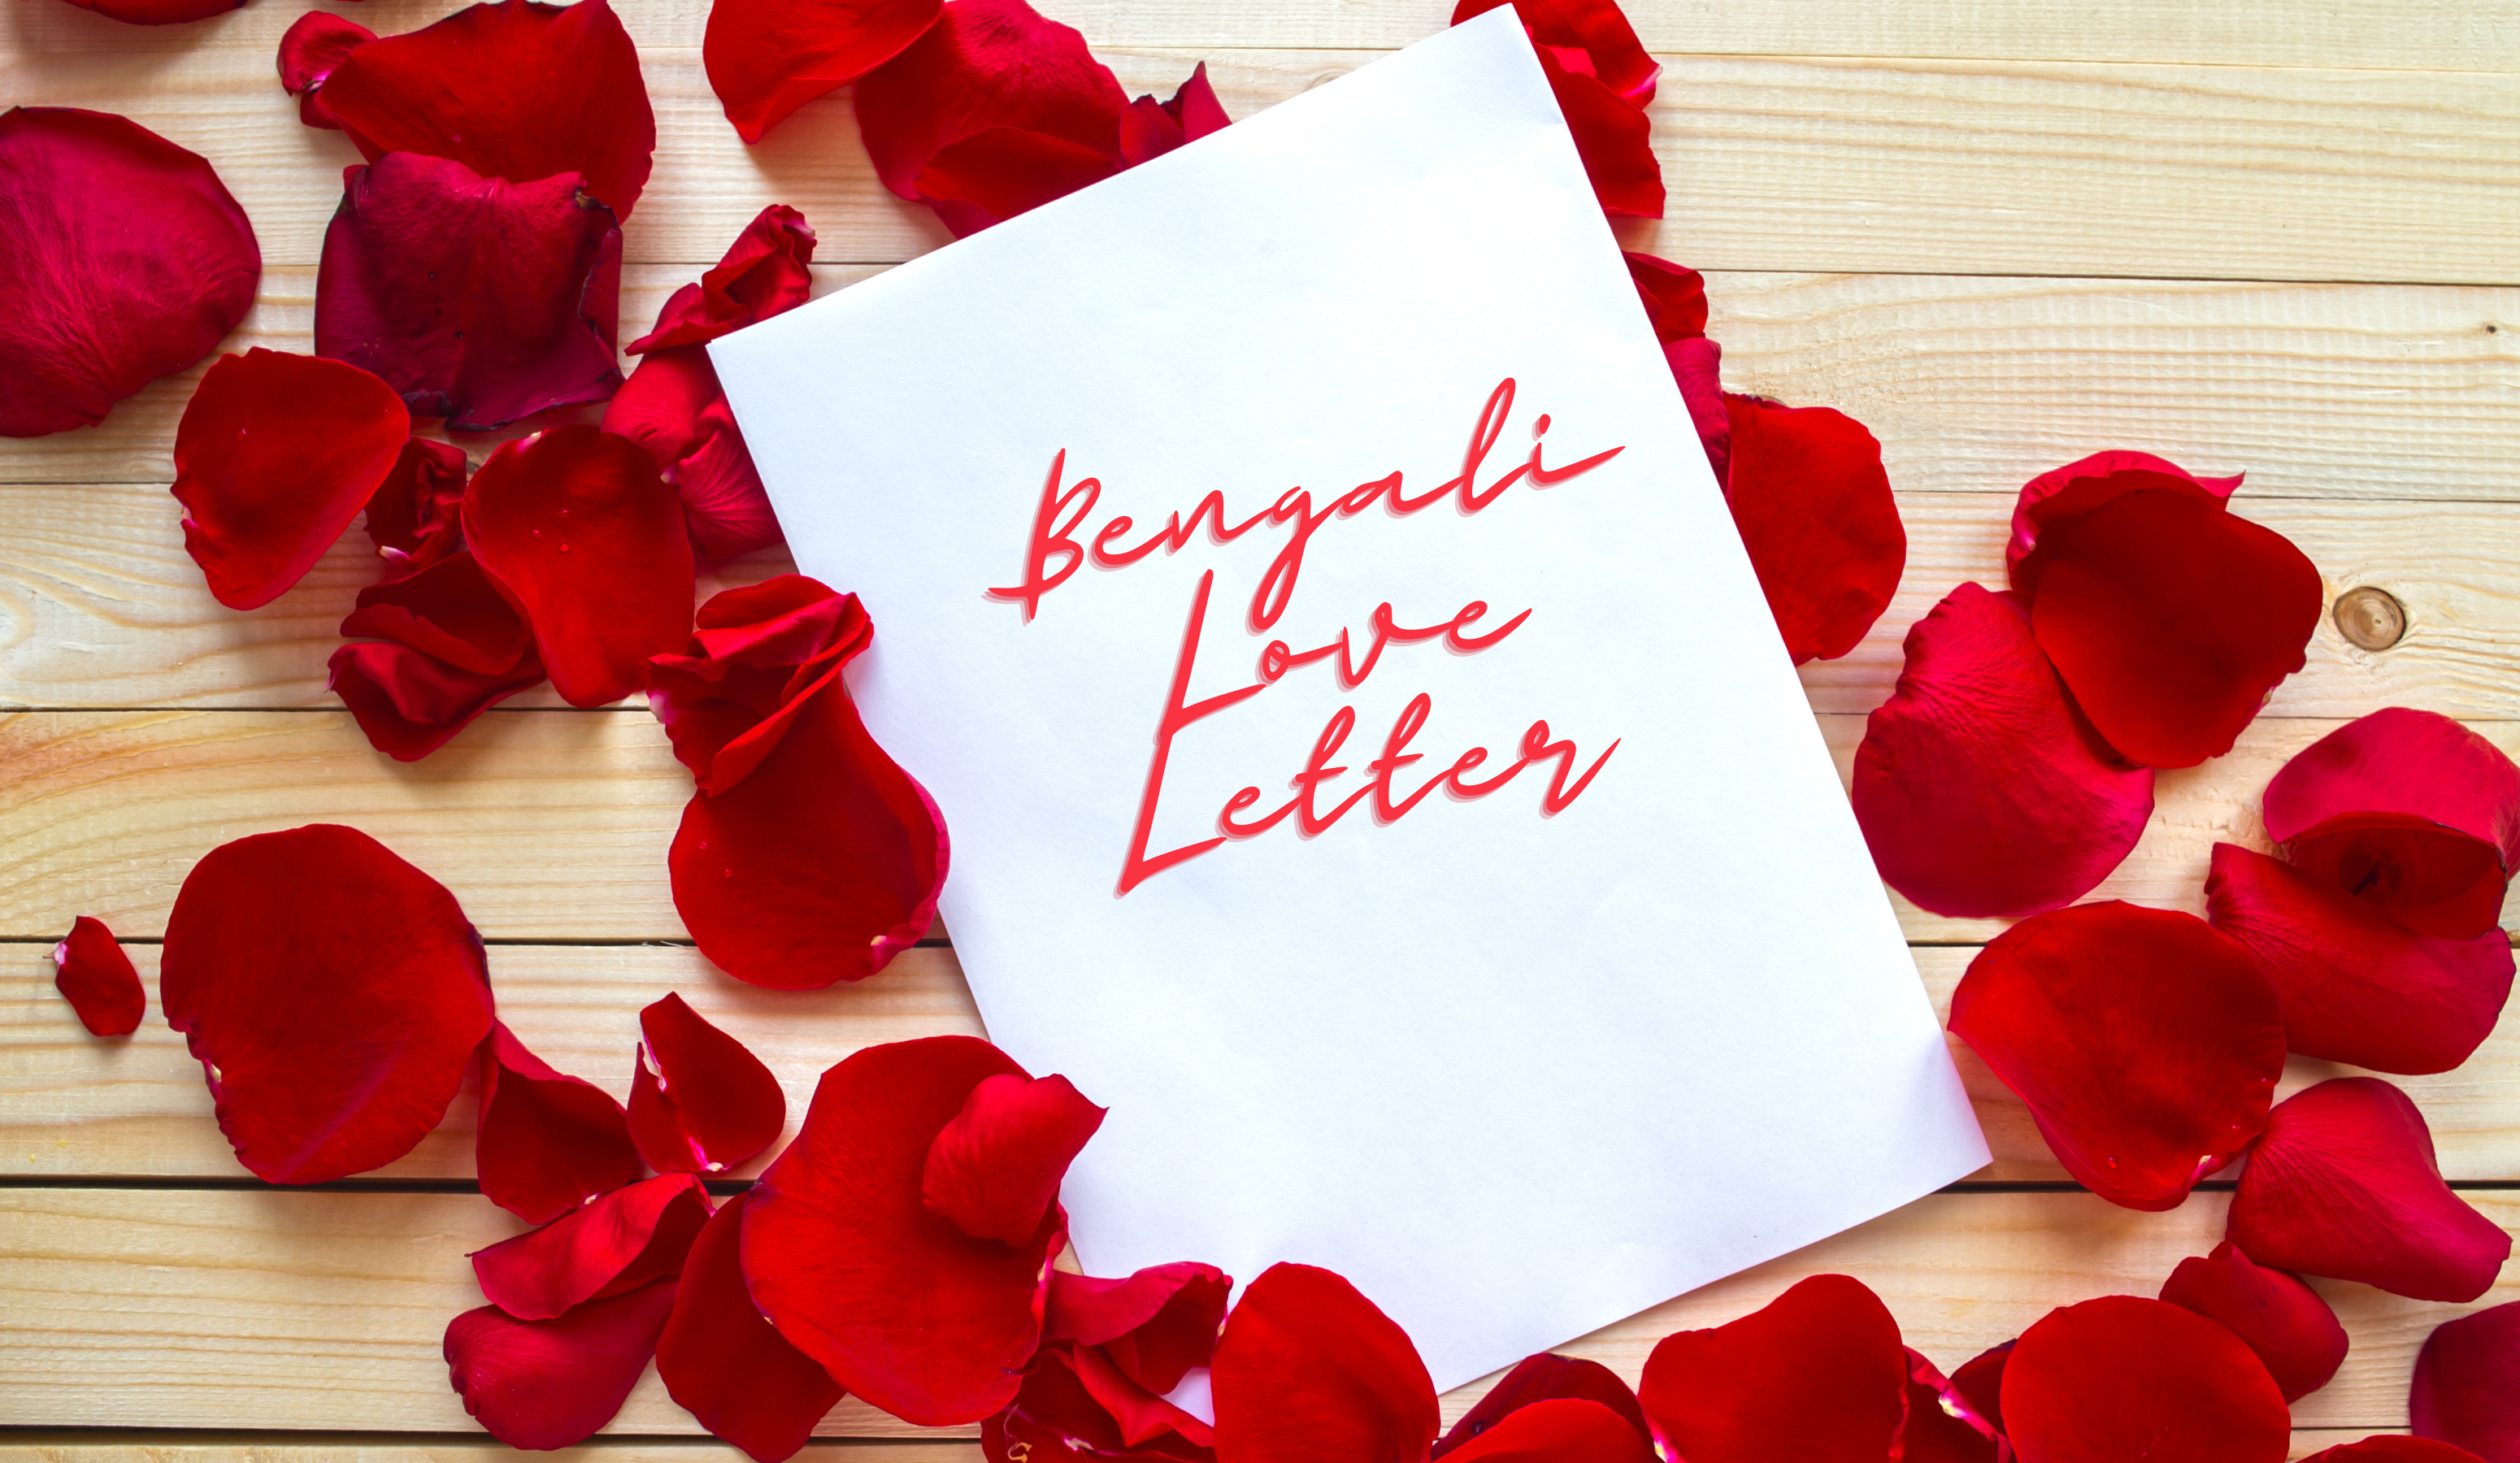 Bengali Love Letter